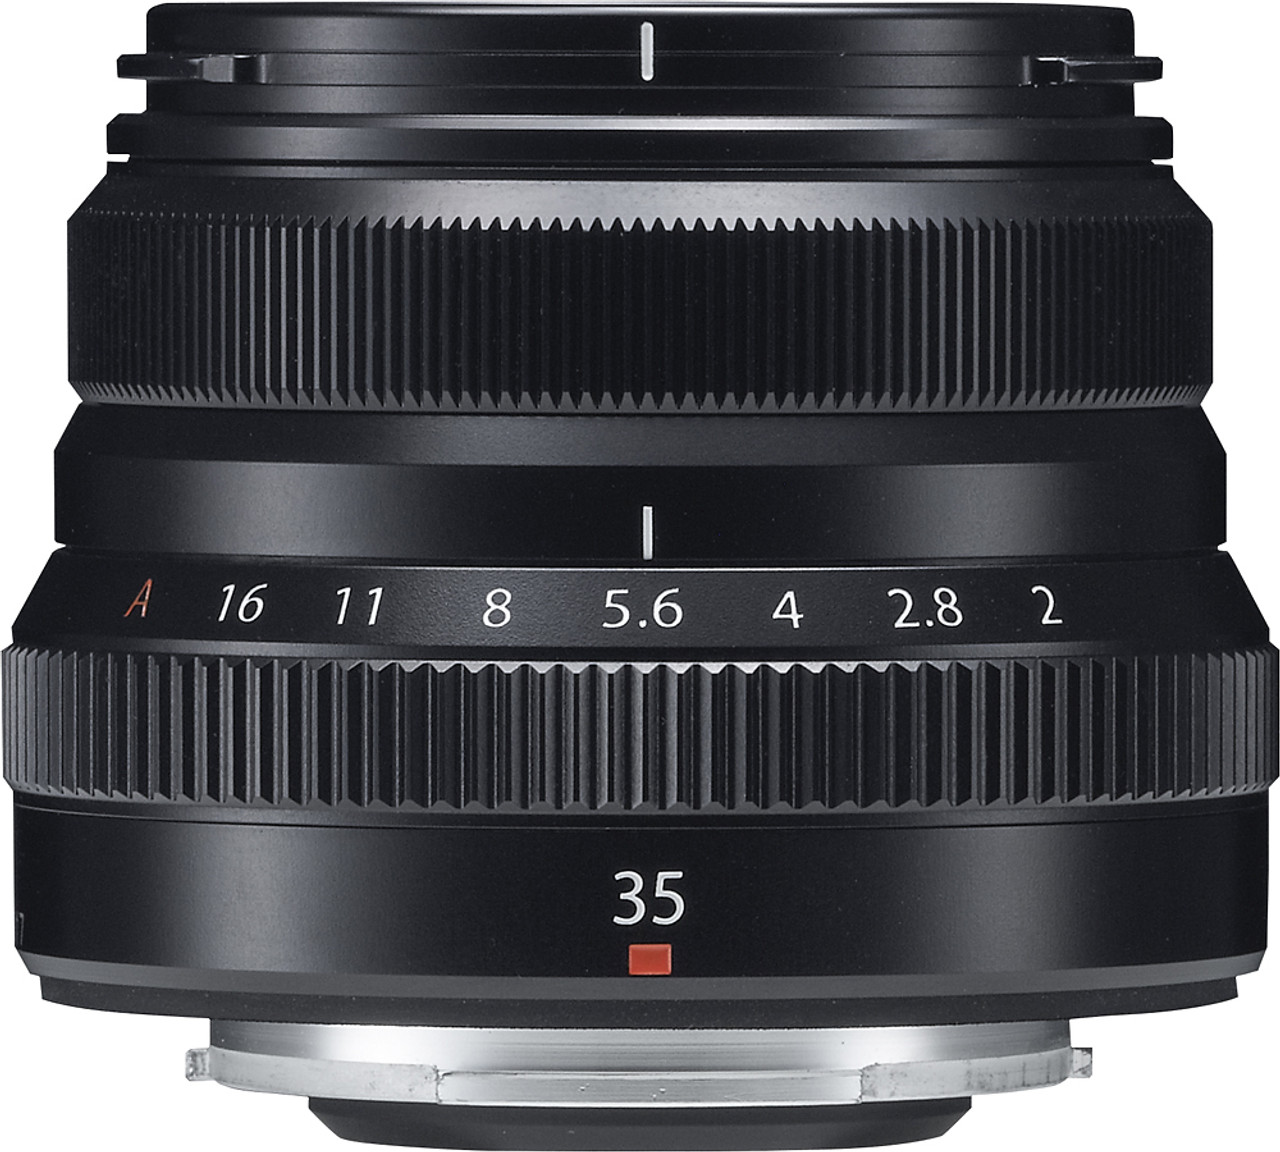 Fujifilm - FUJINON XF 35mm f/2 R WR Standard Lens for Fujifilm X-Mount System Cameras - black